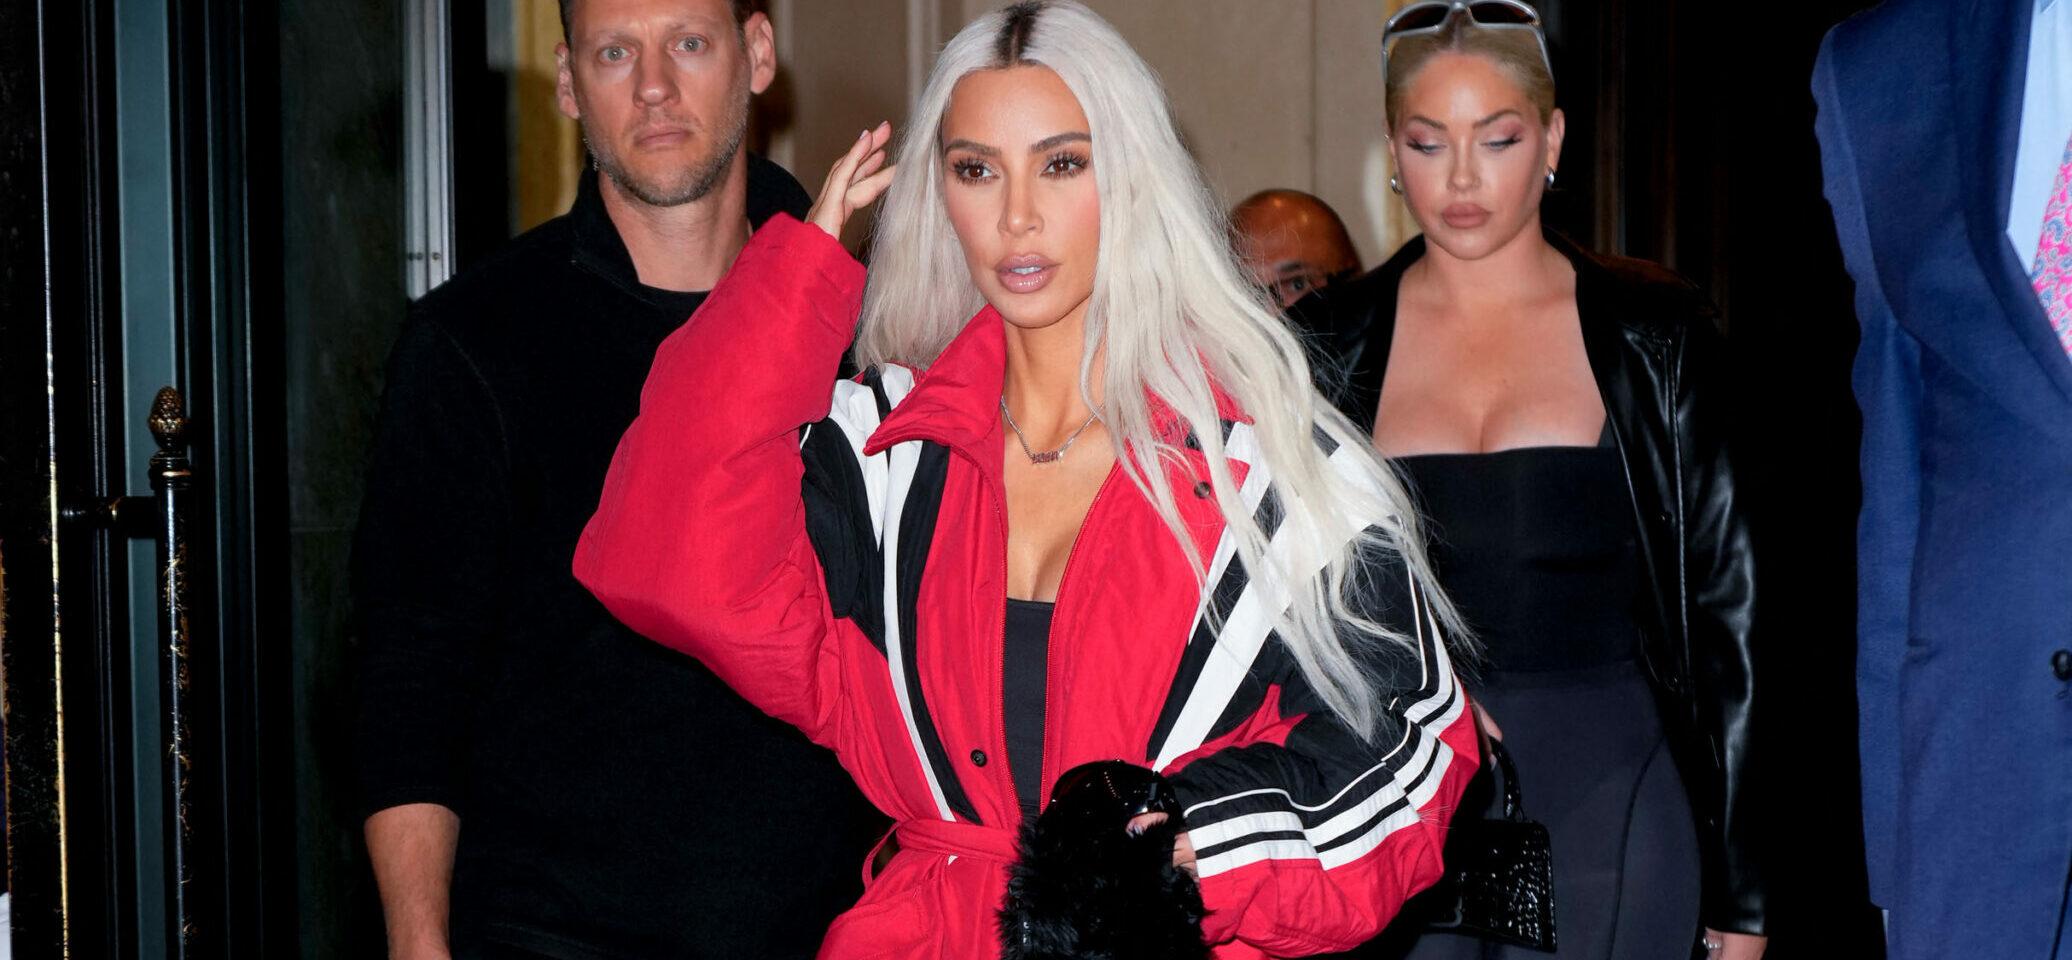 Kim Kardashian Files Restraining Order Against Gun-wielding 'Stalker'